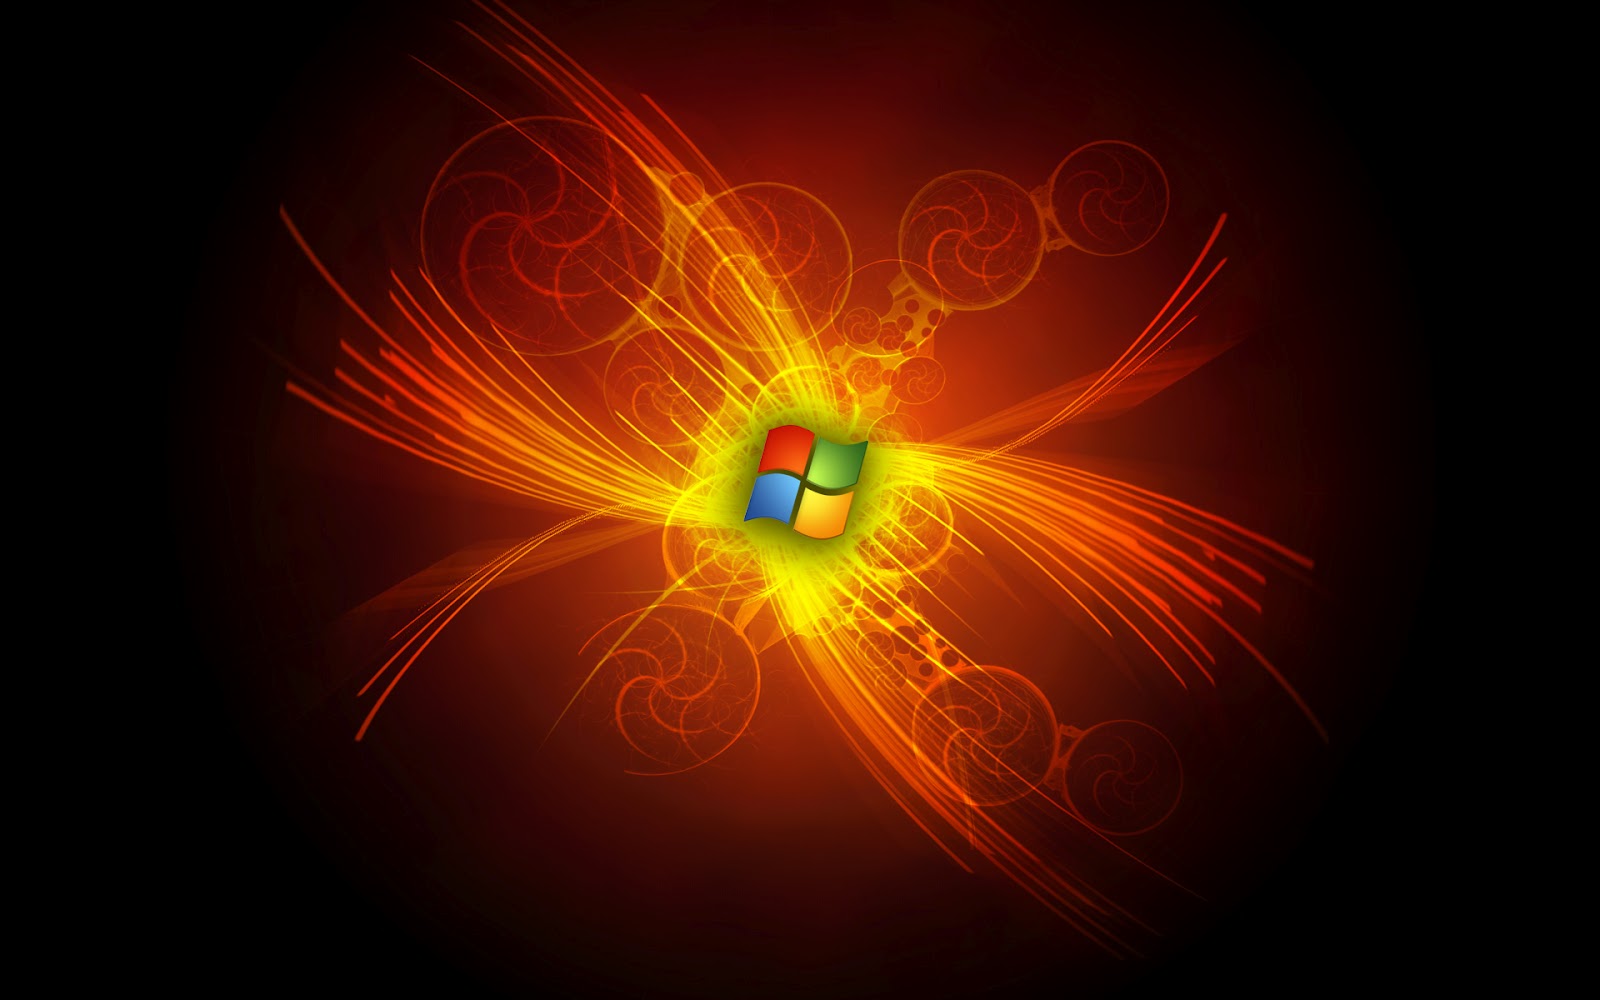 Windows 7 Wallpaper Hd Download